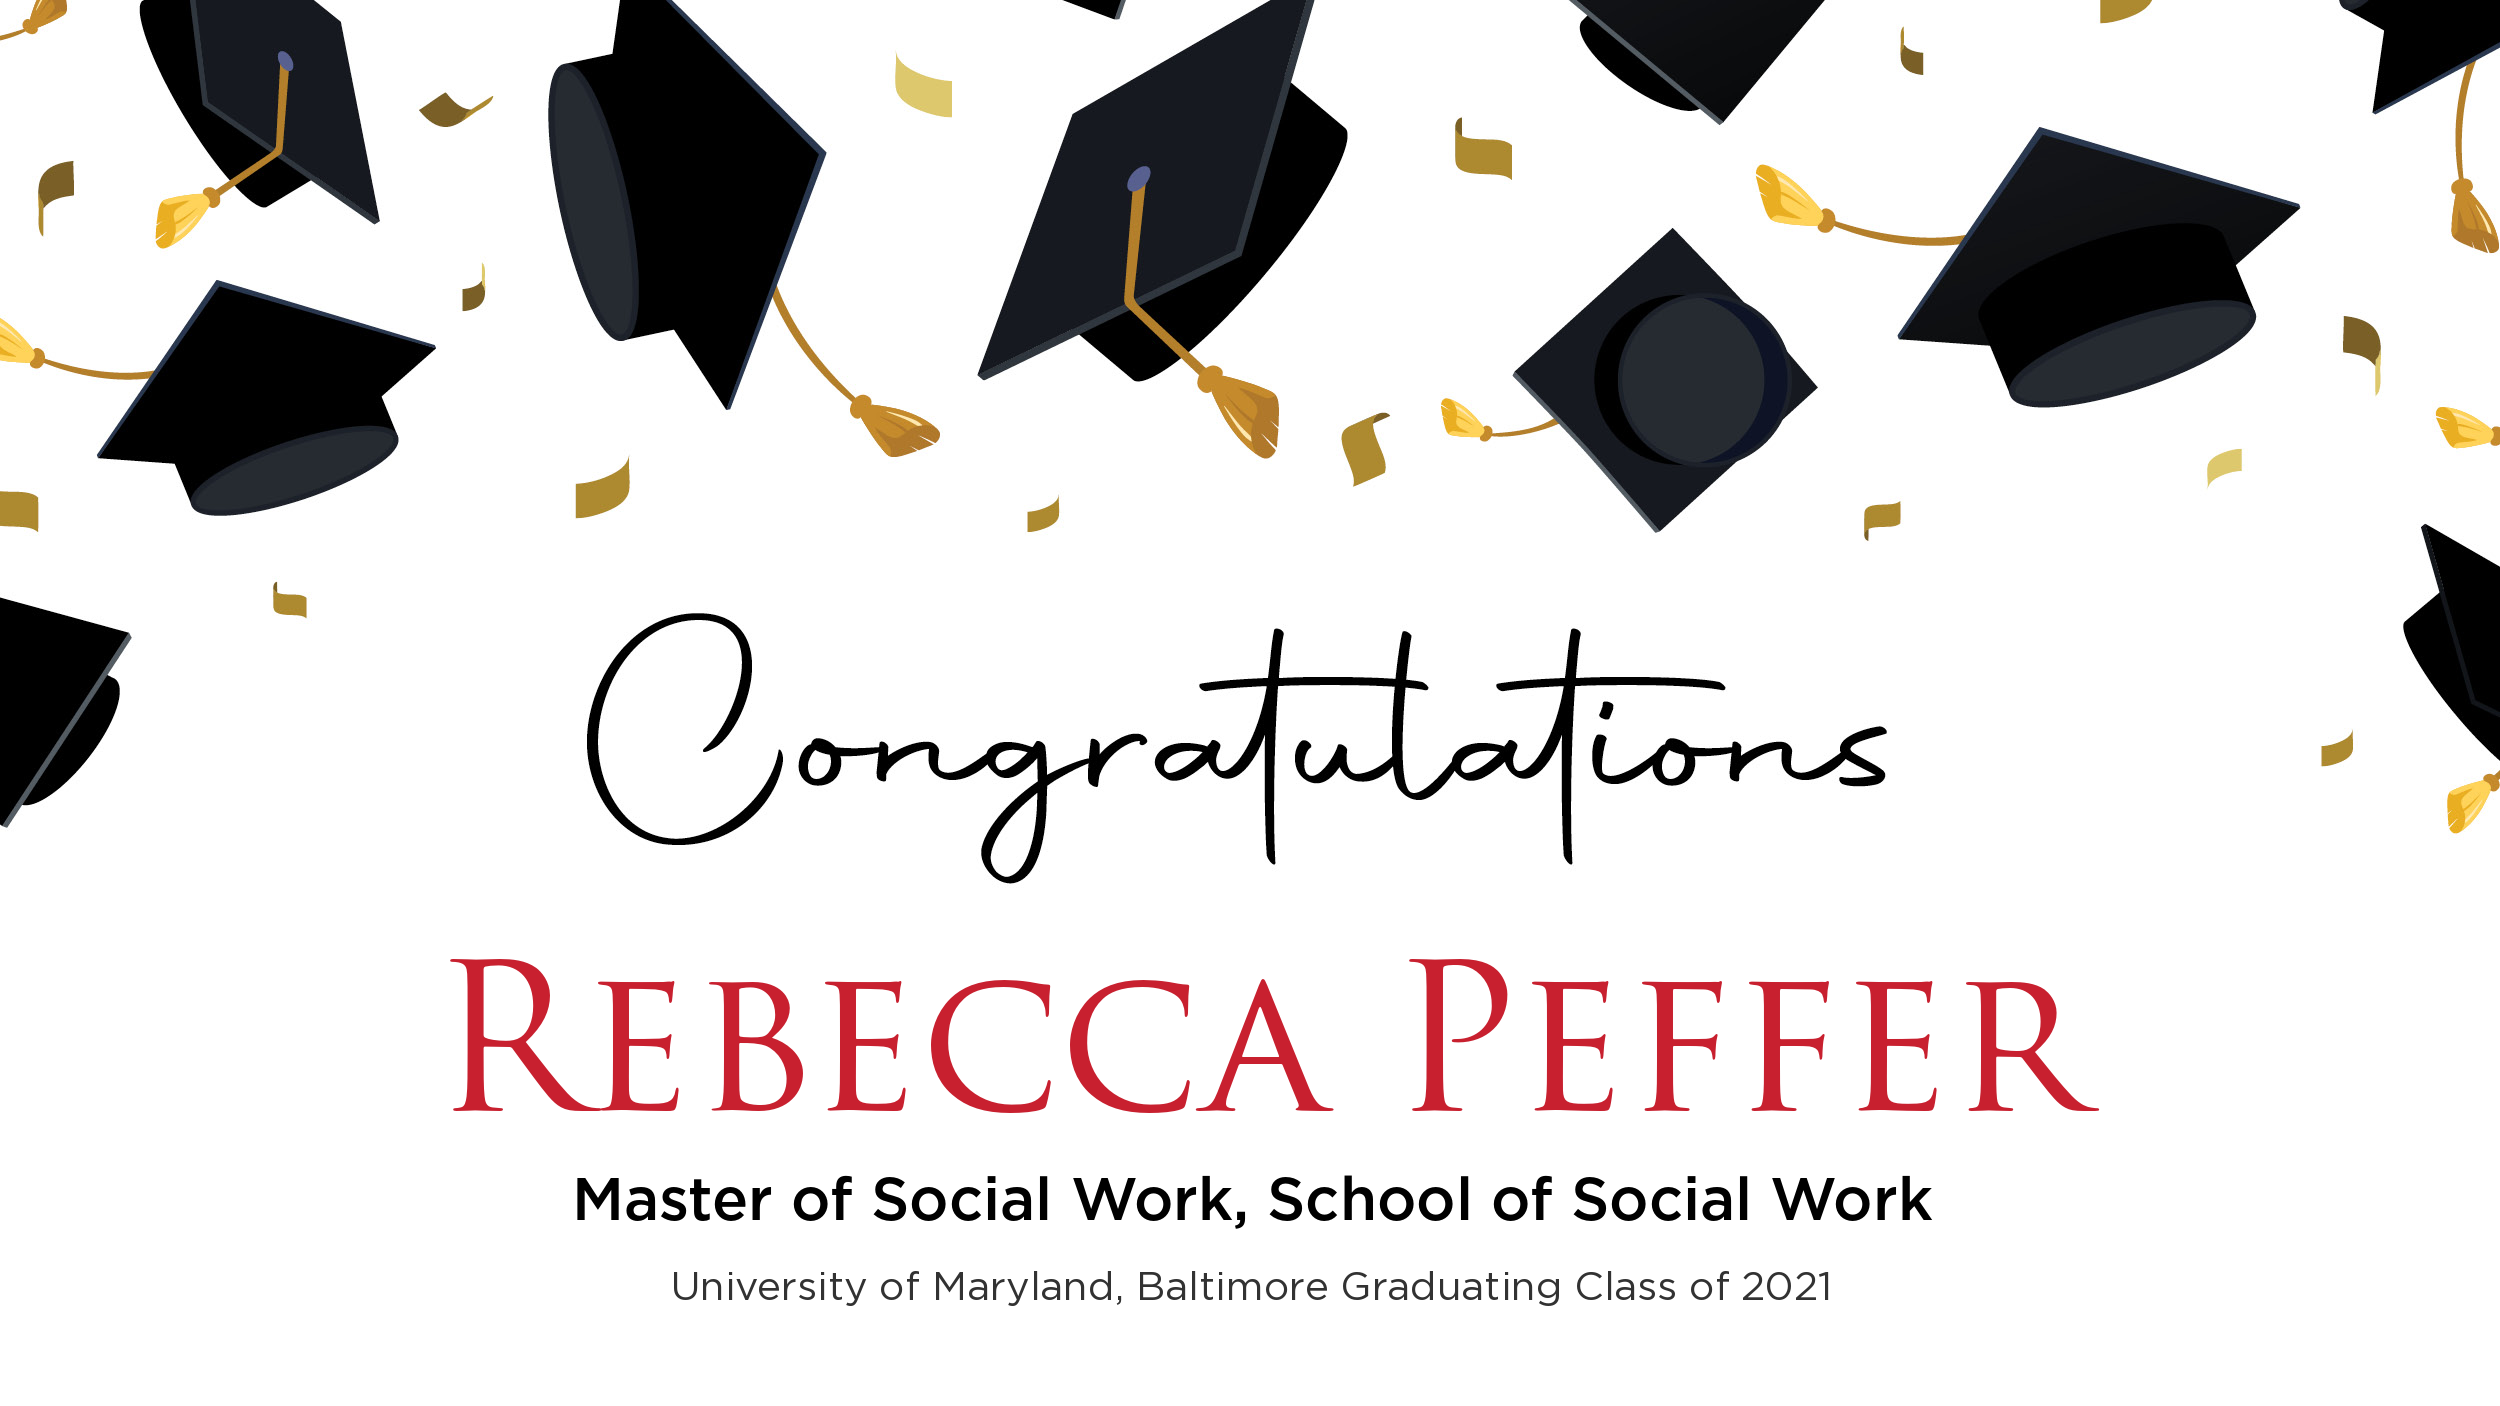 Congratulations Rebecca Peffer, Master of Social Work